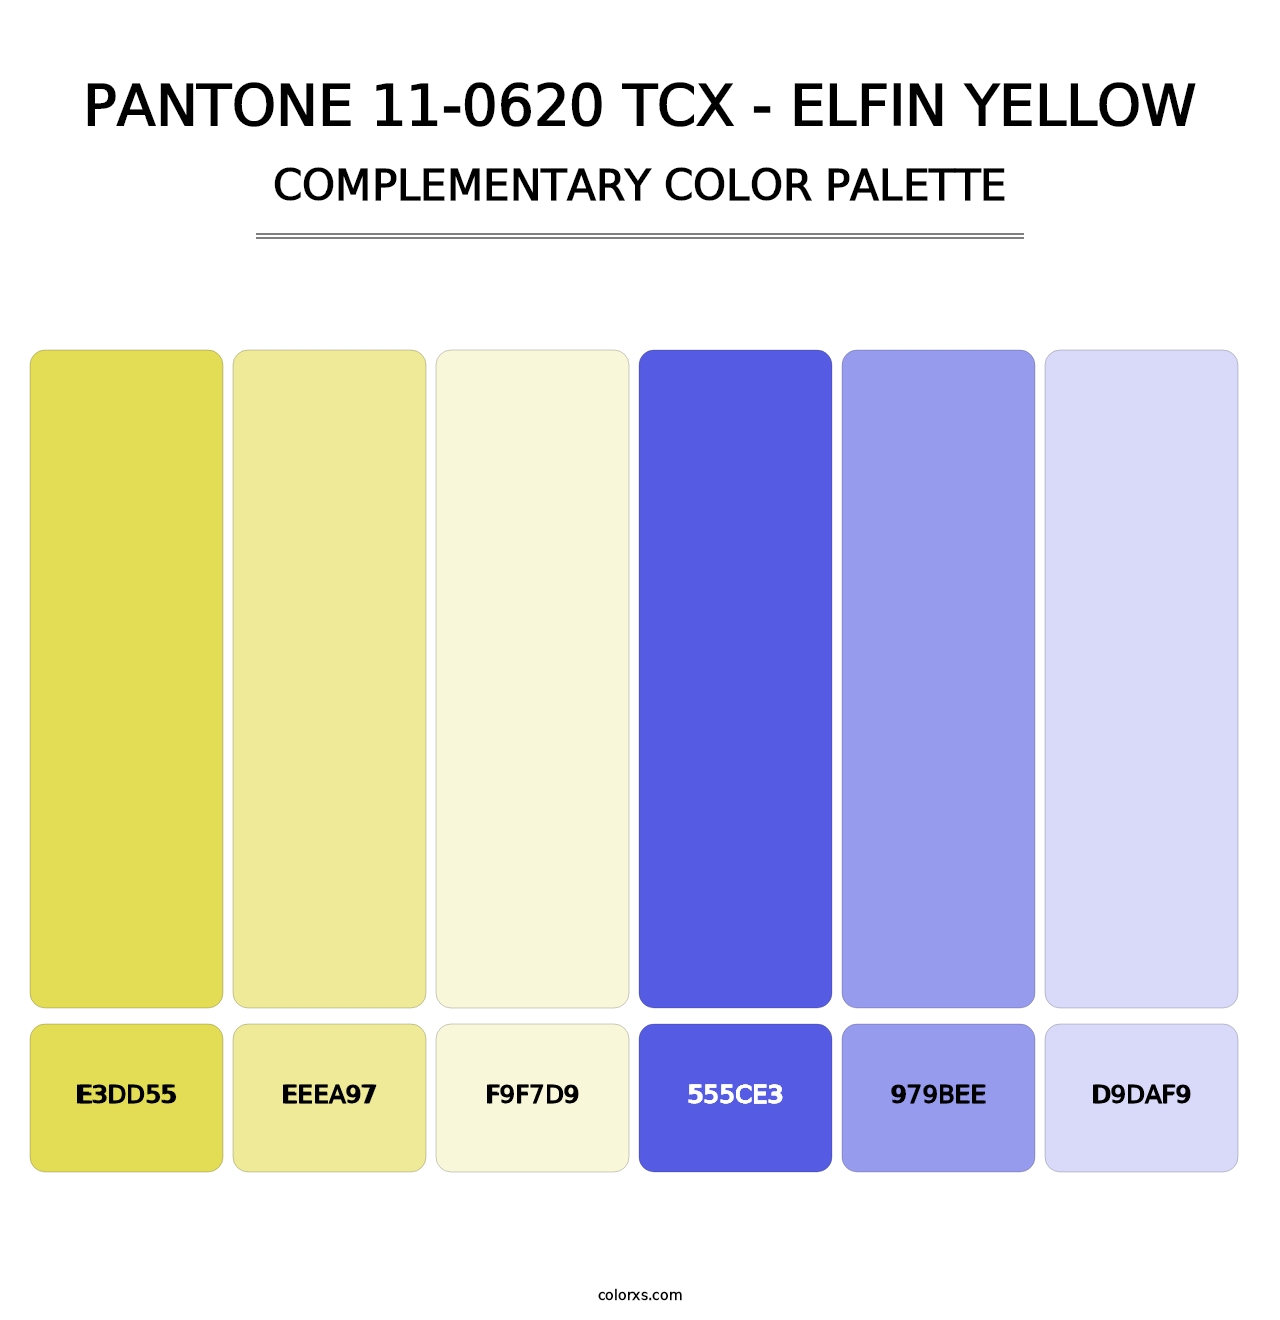 PANTONE 11-0620 TCX - Elfin Yellow - Complementary Color Palette